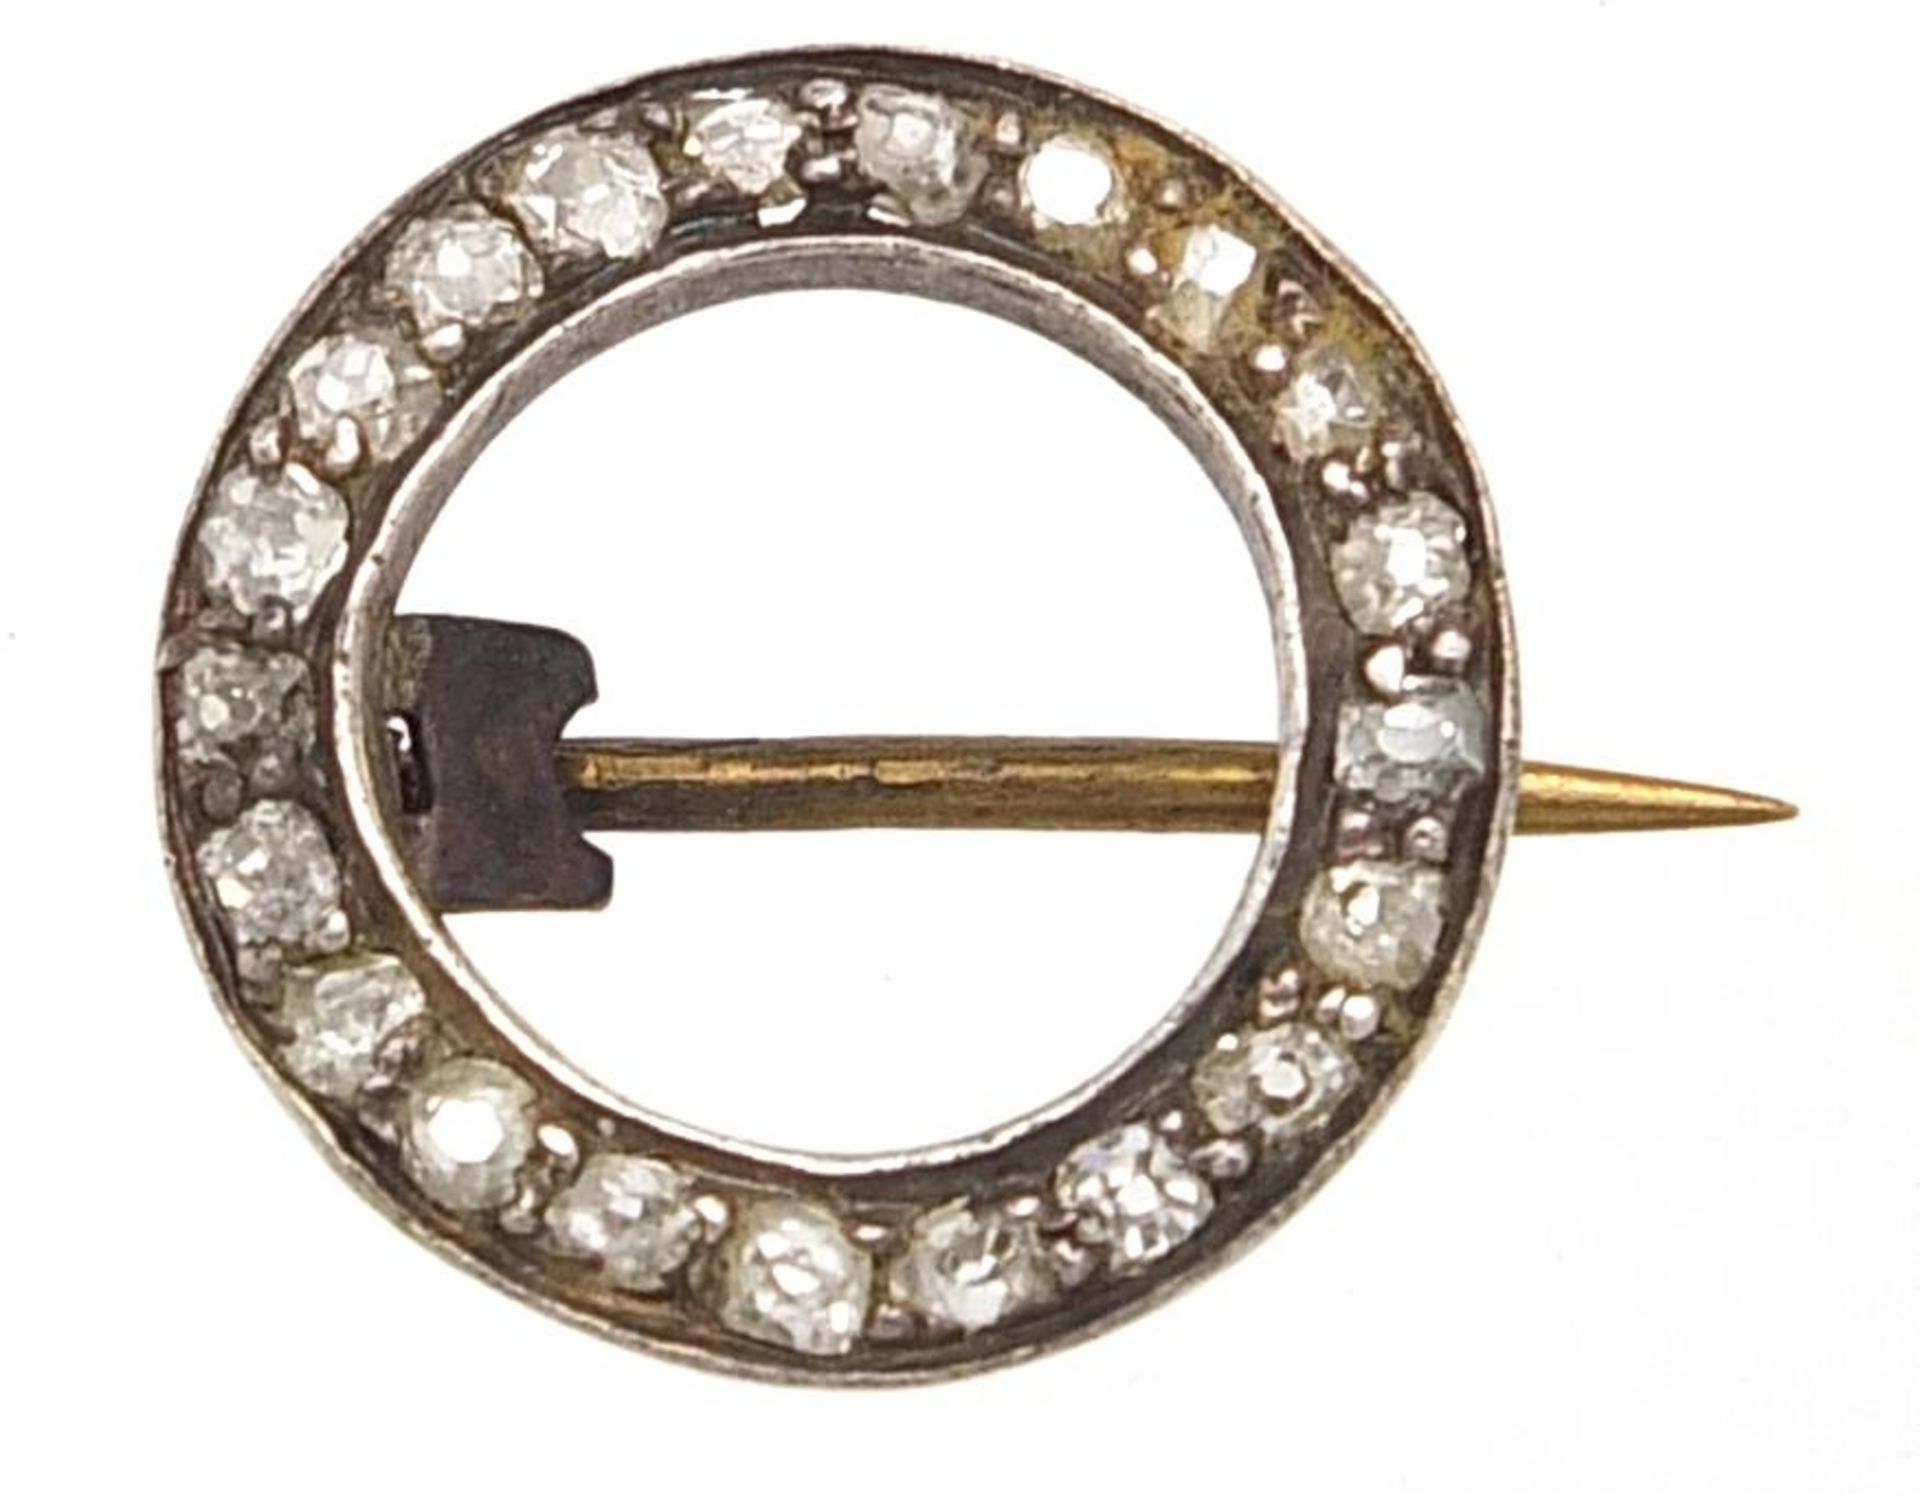 Unmarked gold diamond brooch, 1.6cm in diameter, 1.5g